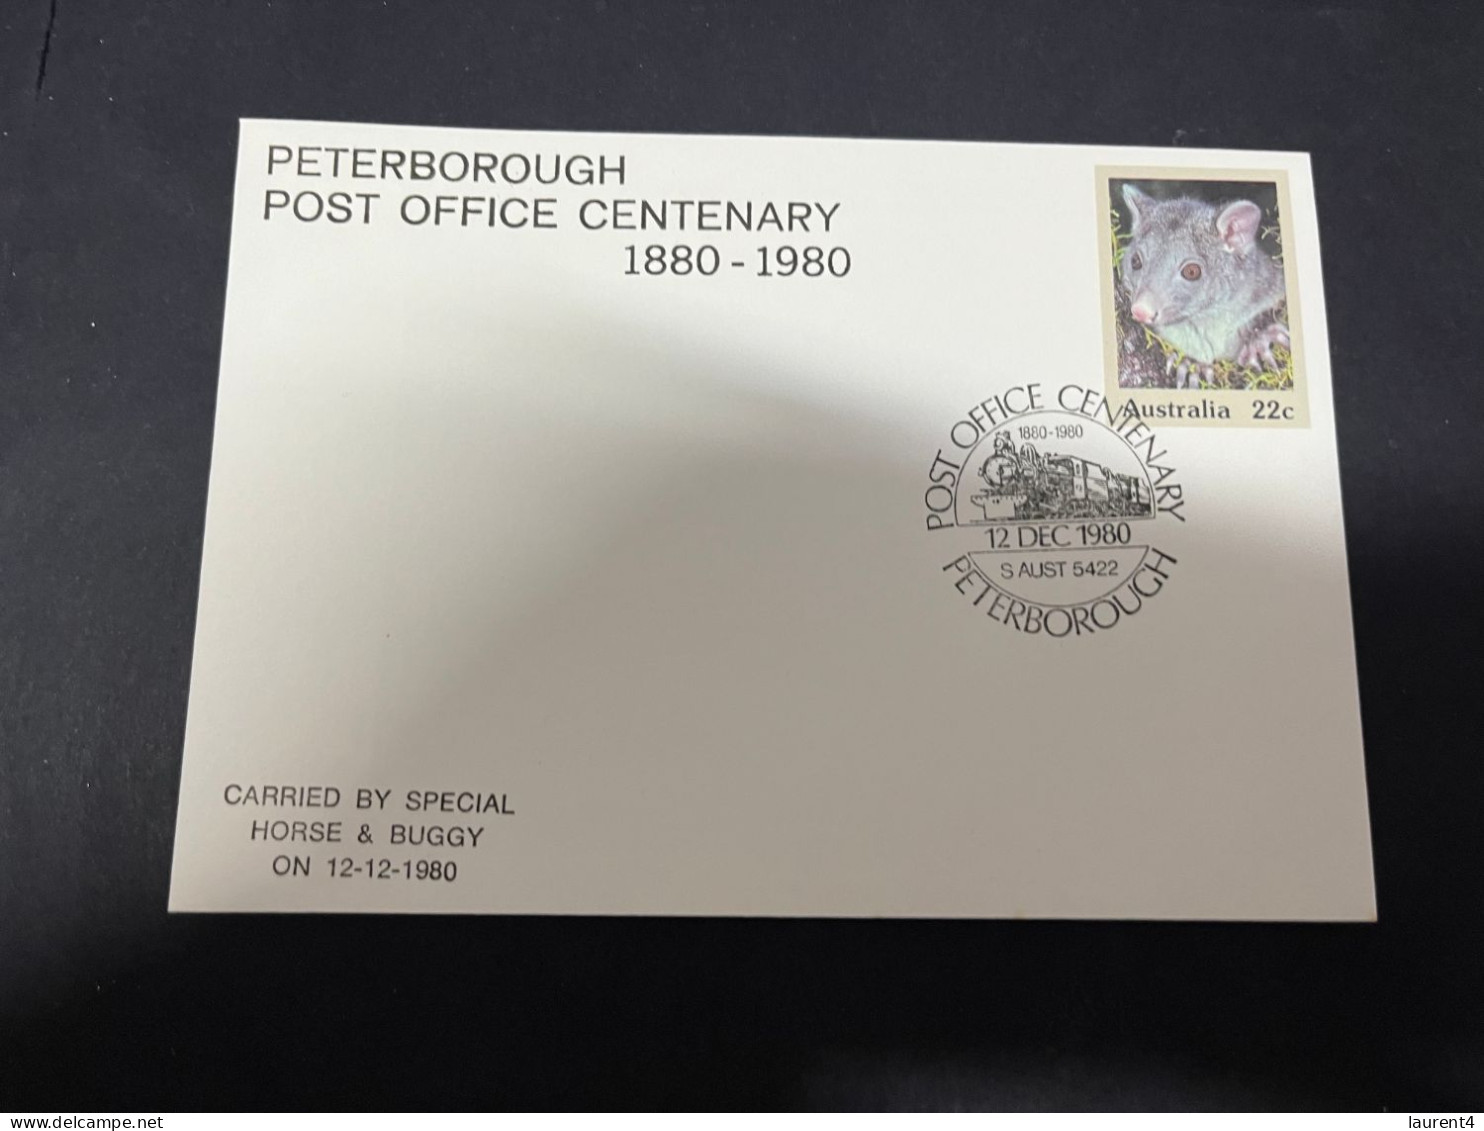 30-4-2023 (3 Z 29) Australia FDC (1 Cover) 1980 - Peterborough Post Office Centenary (Brushtail Possum) - FDC